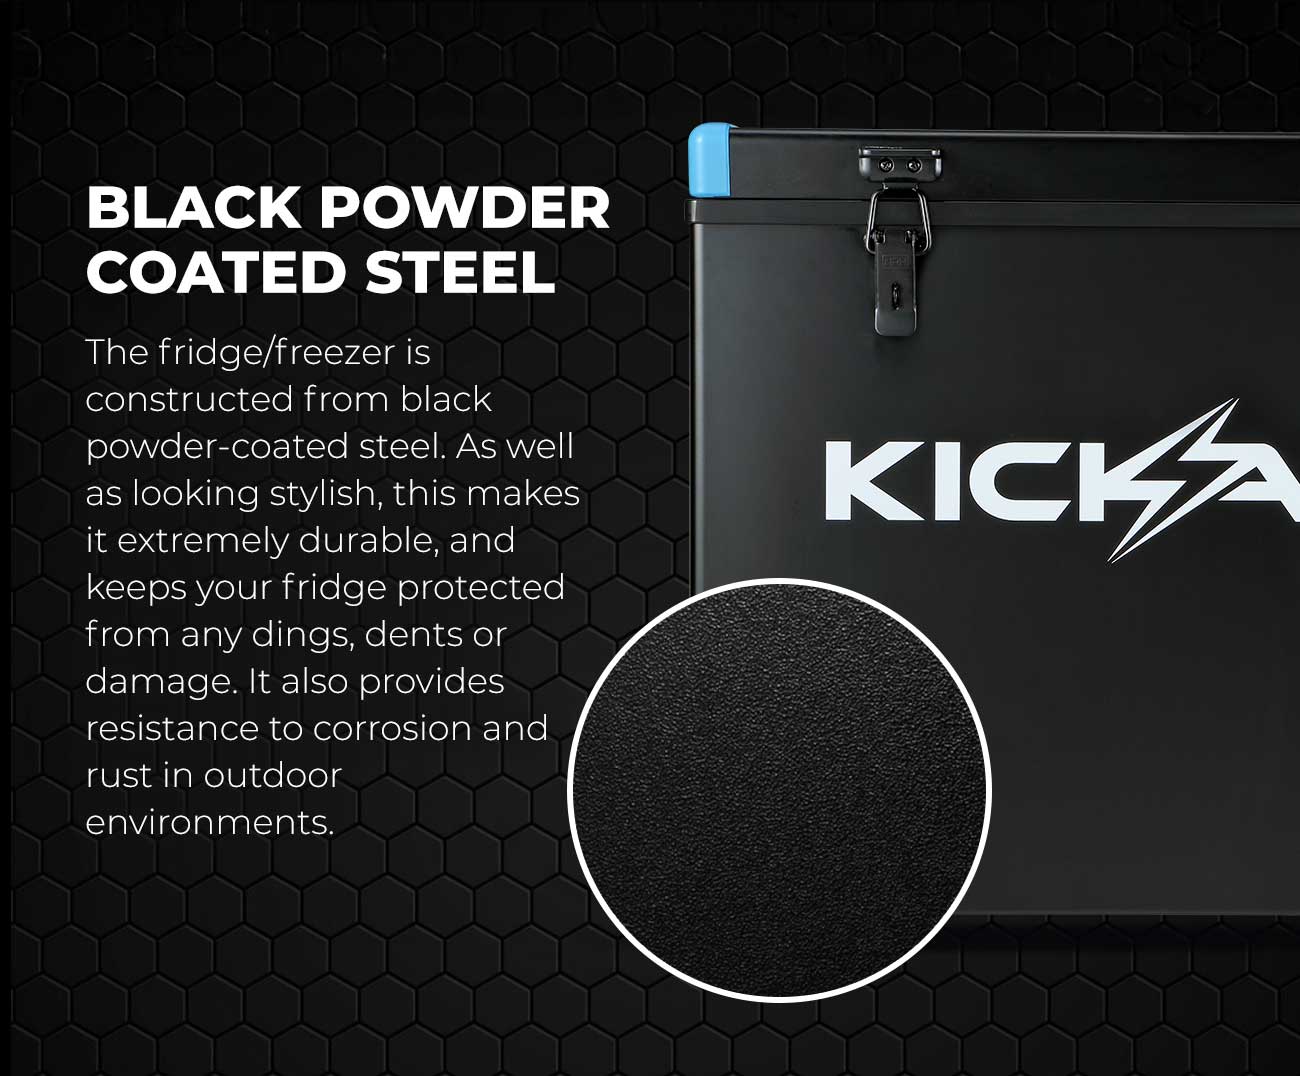 KickAss Single Zone 45L Fridge Freezer